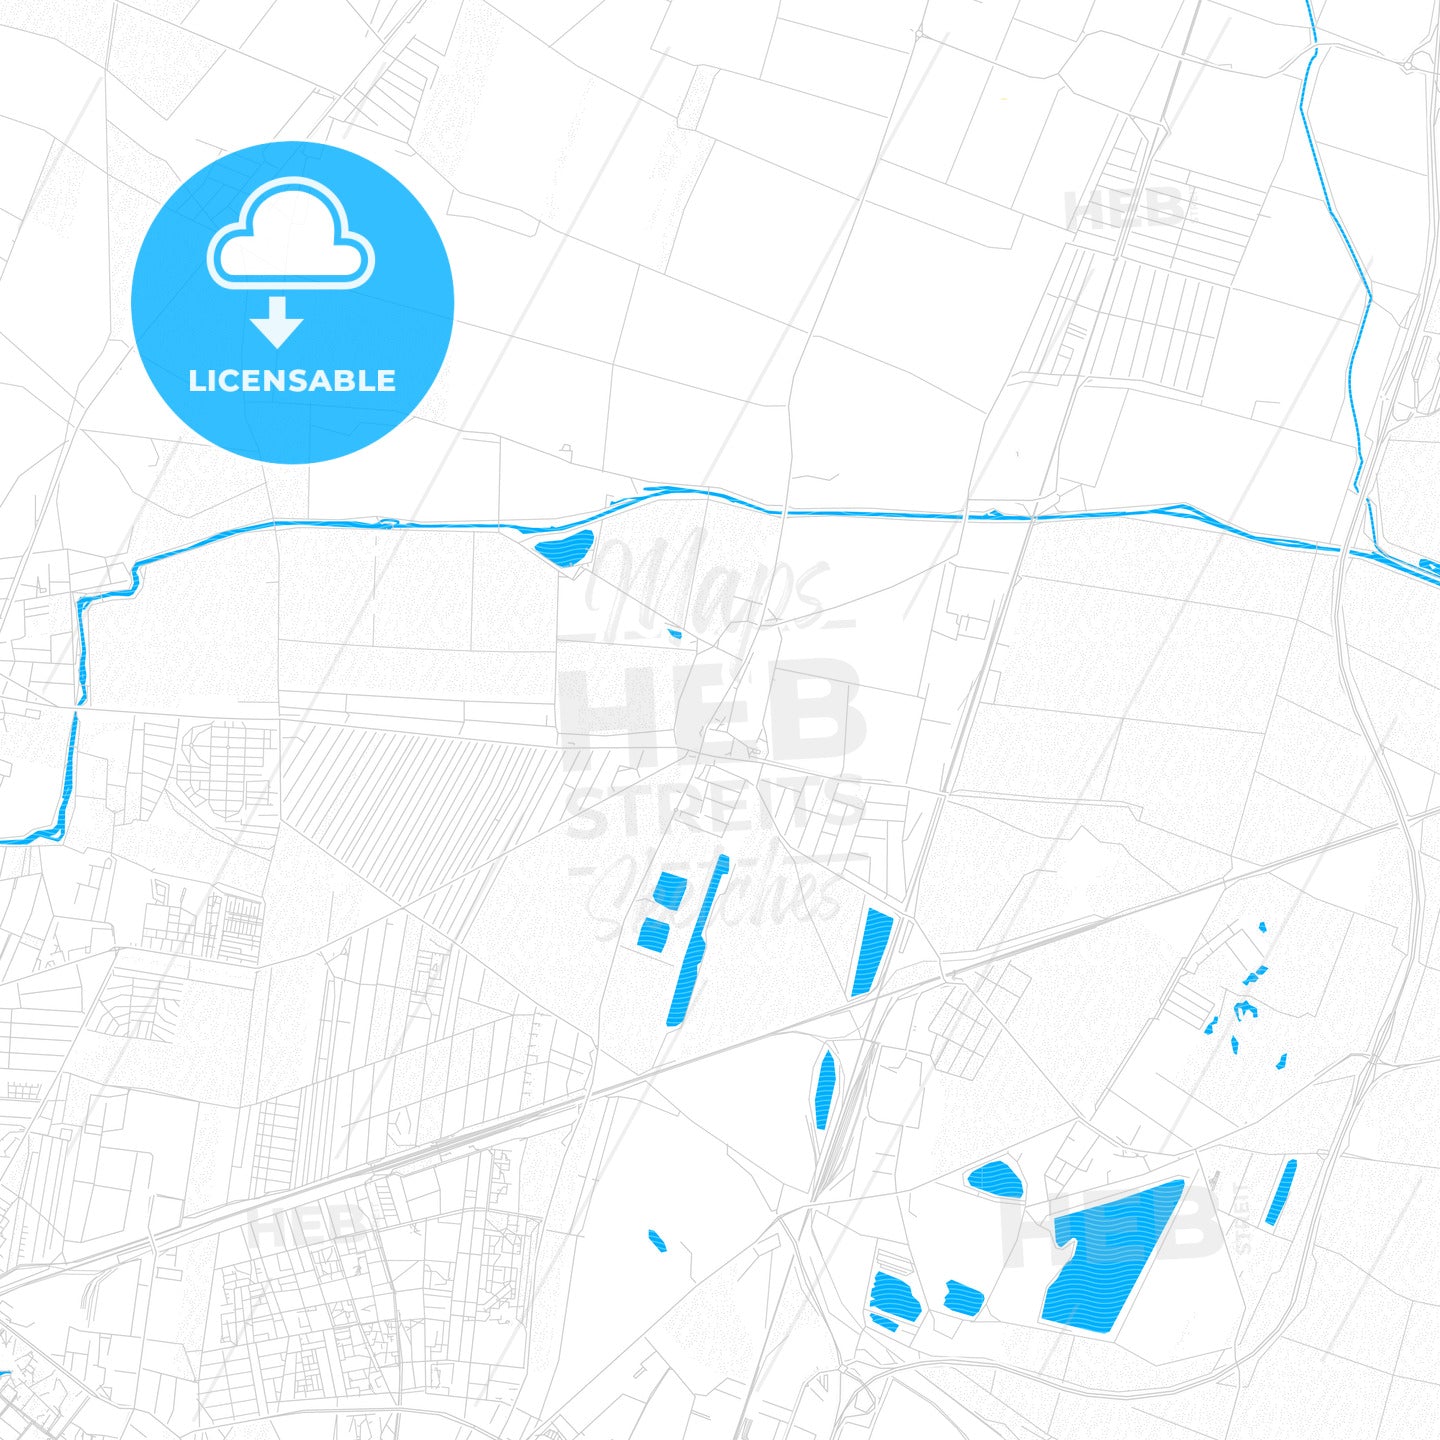 Gerasdorf bei Wien, Austria PDF vector map with water in focus